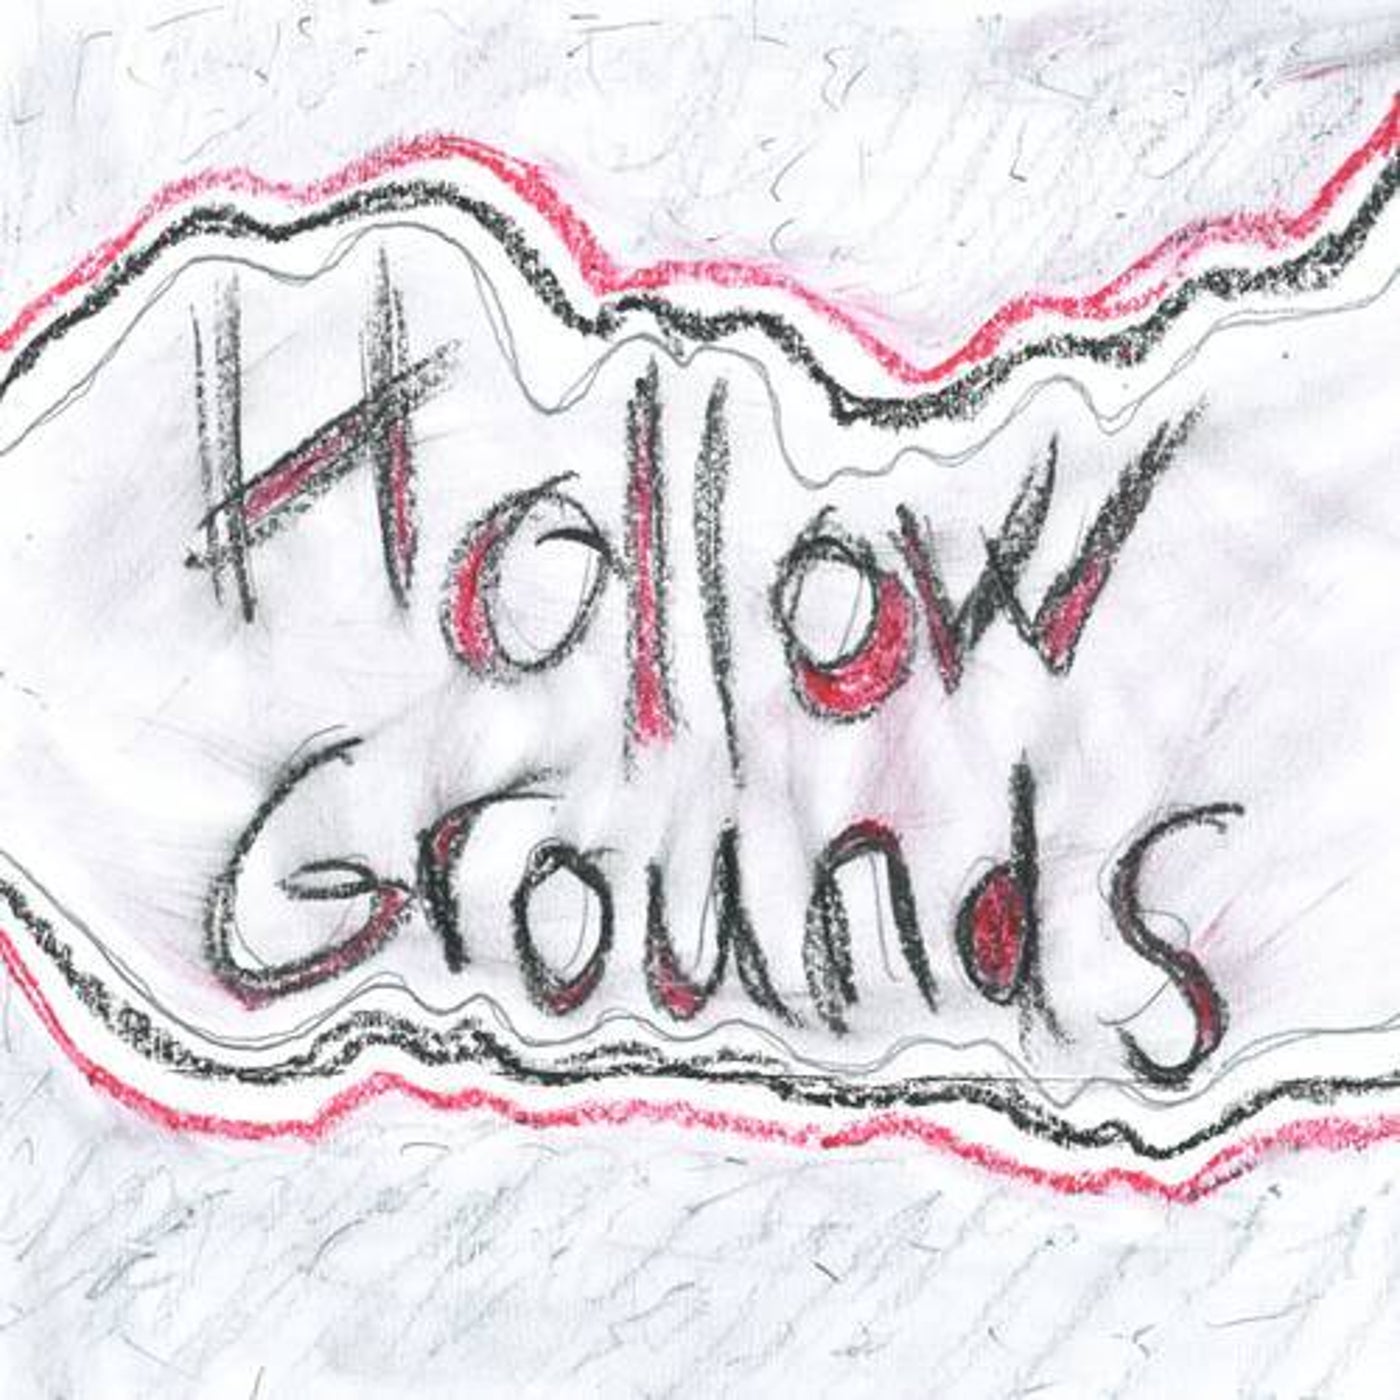 Hollow Grounds